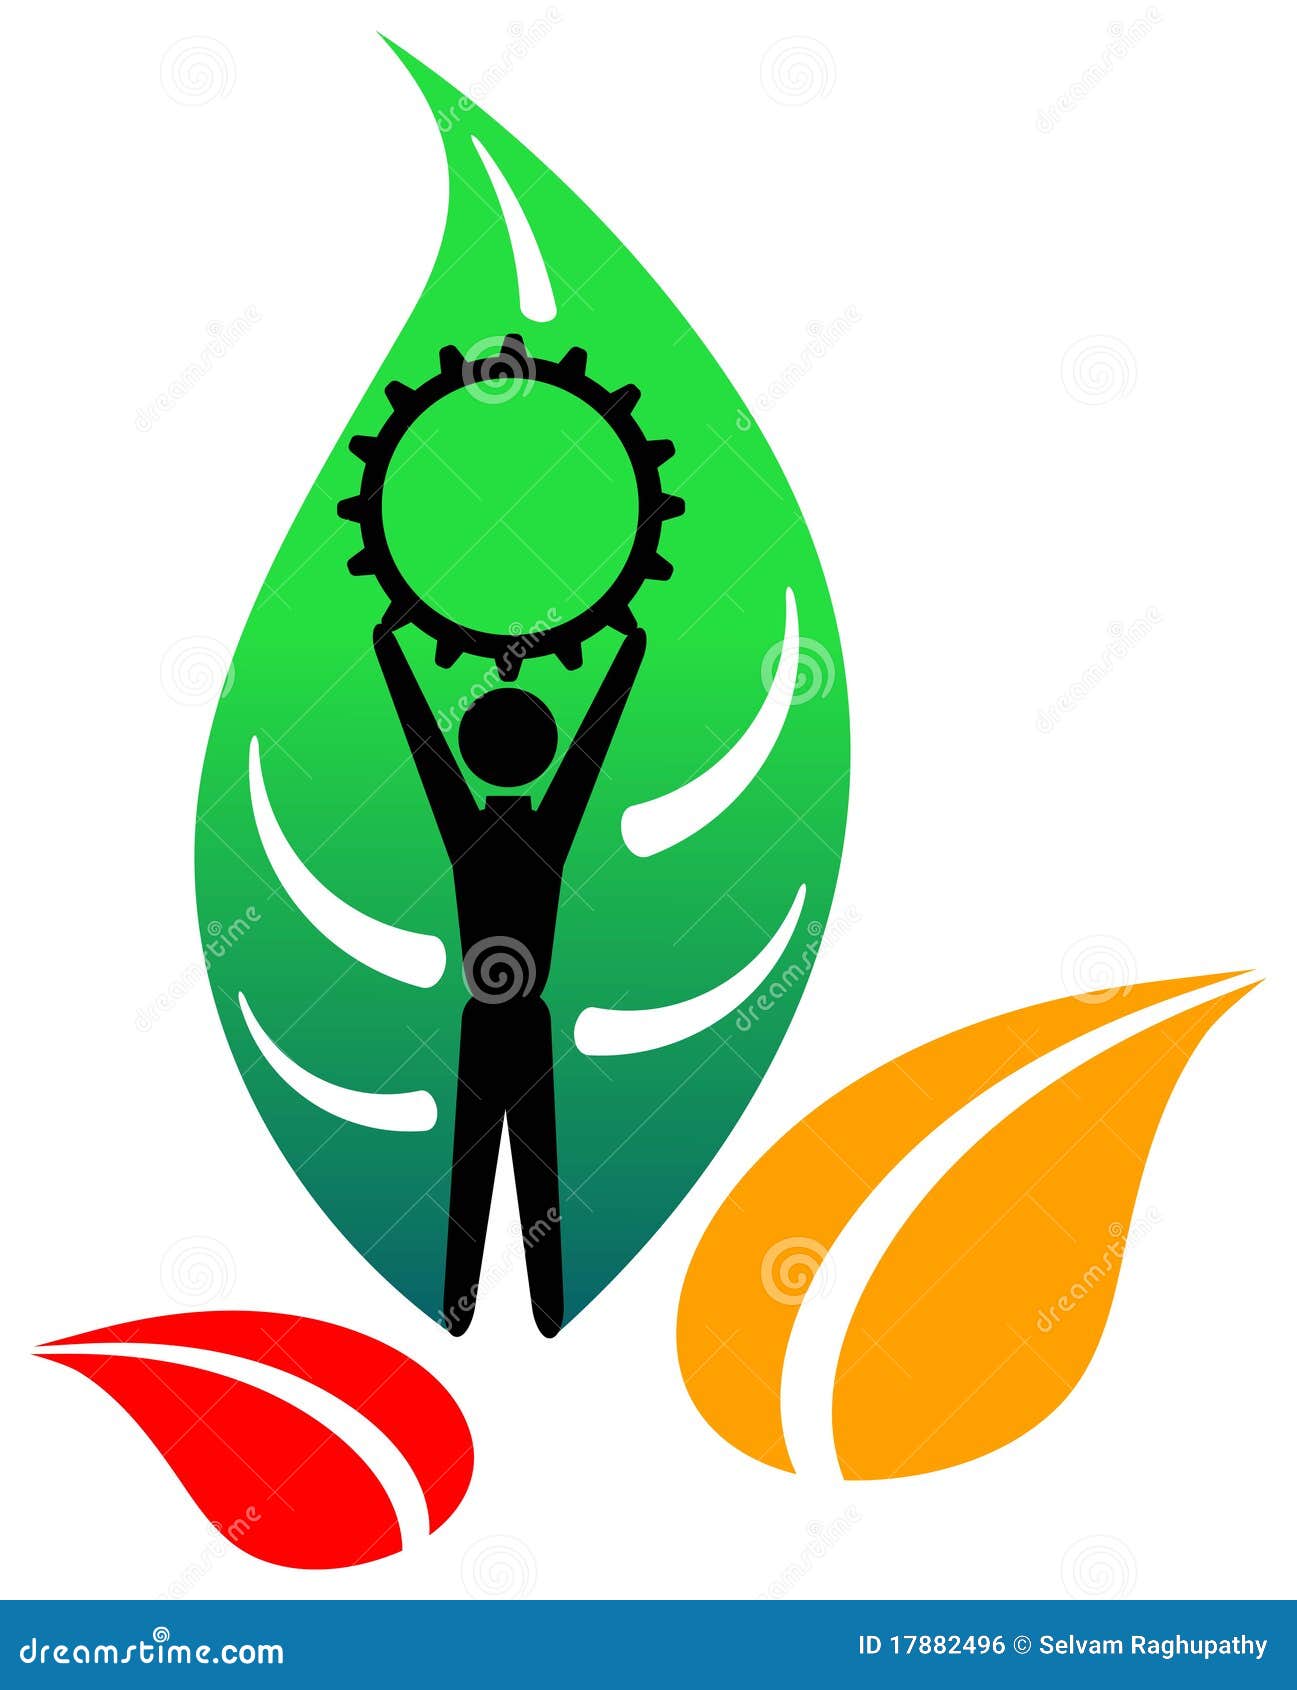 green industries logo